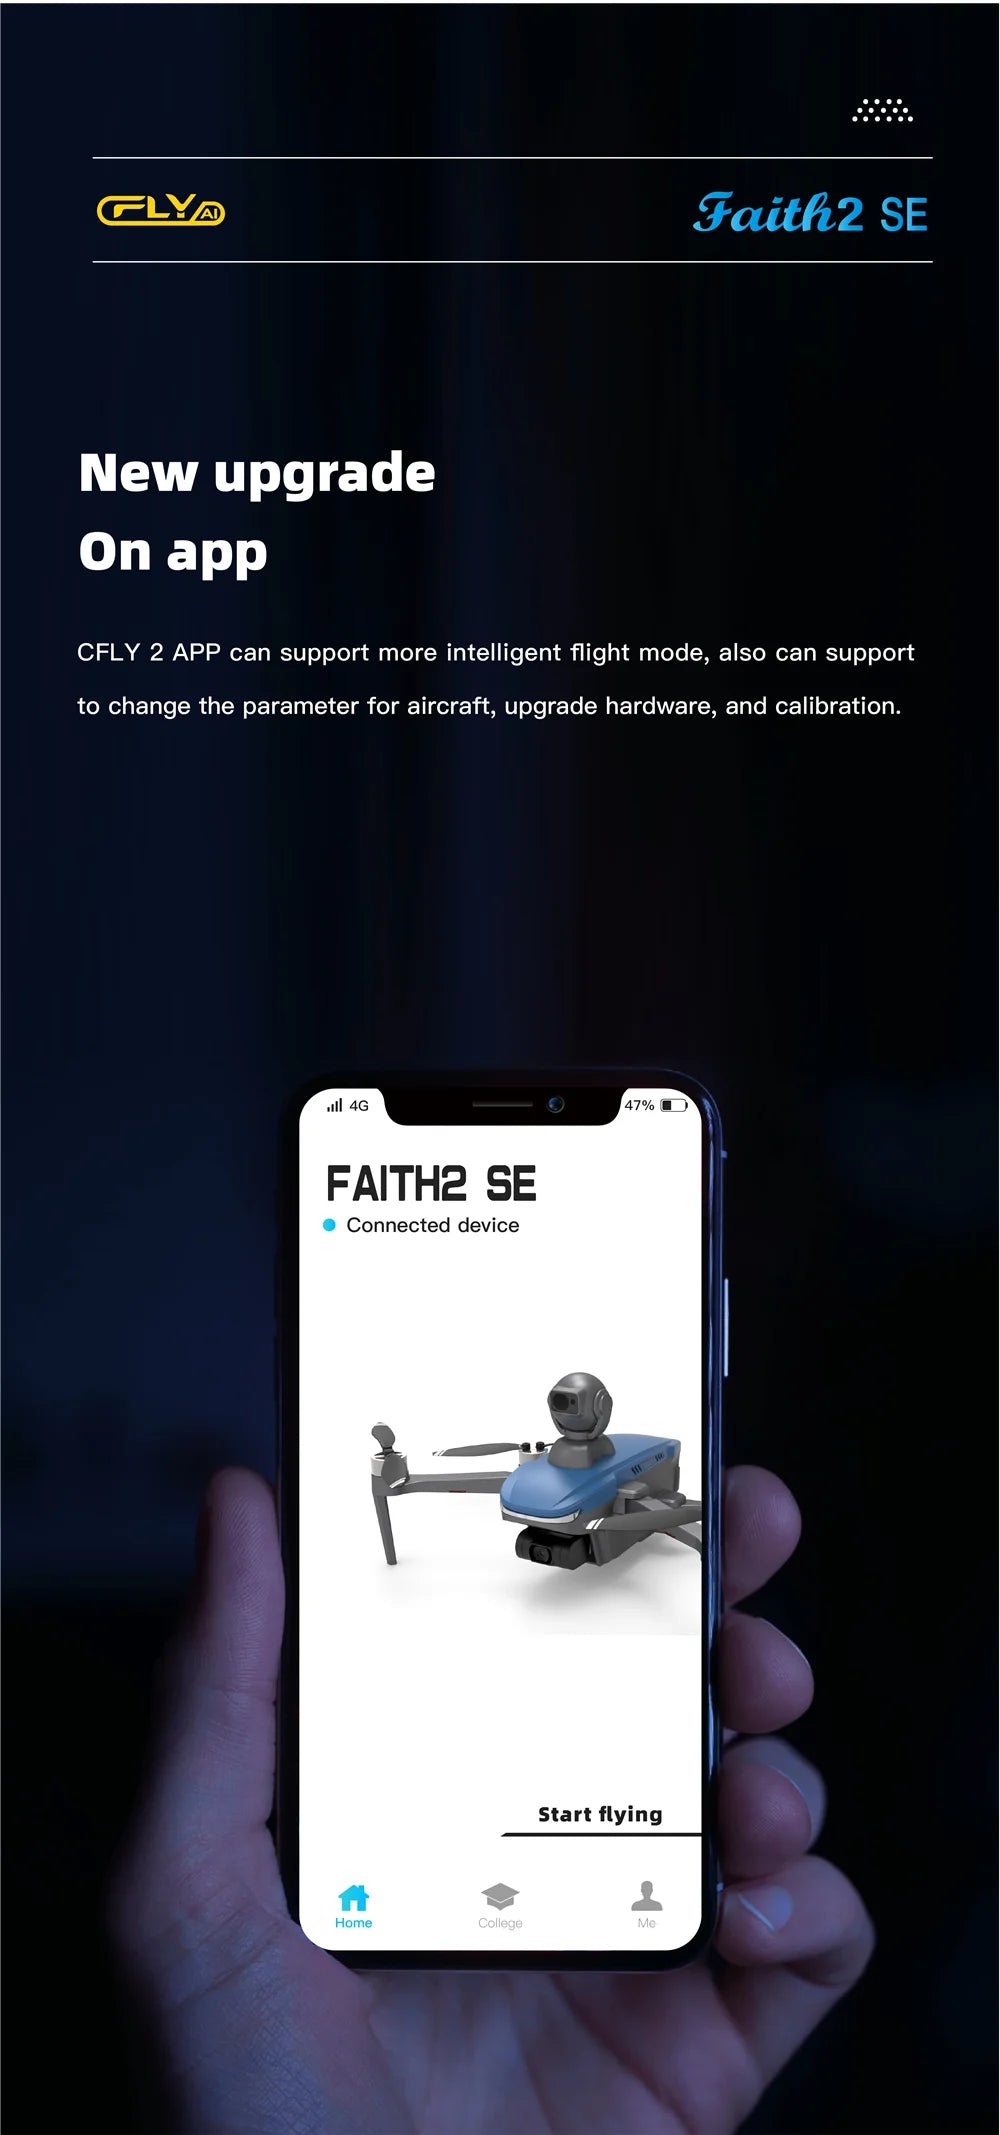 CFLY Faith2 SE Drone, 4G 47% FAITHZ SE Connected device Start flying Home Collega Me